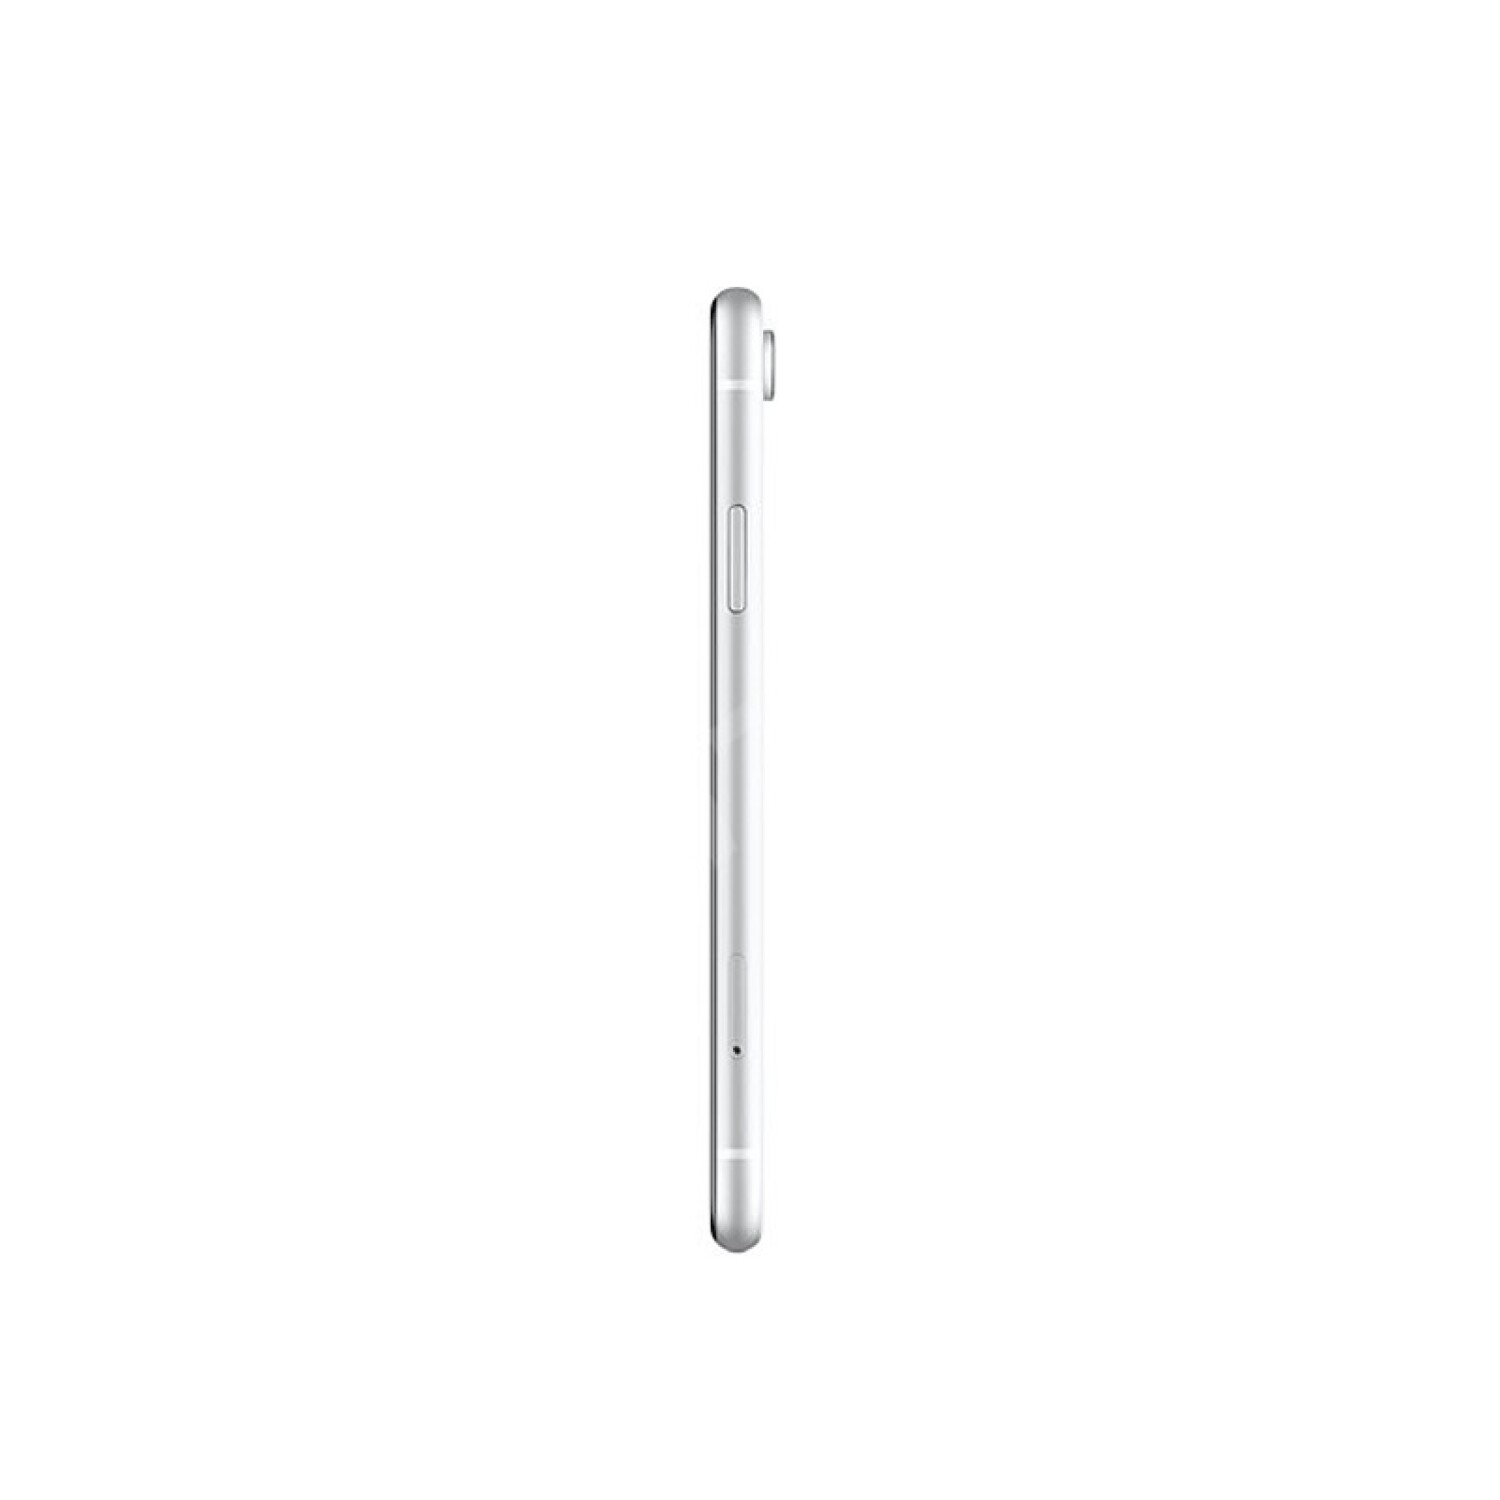 Celular Apple iPhone XR 128GB White — ZonaTecno